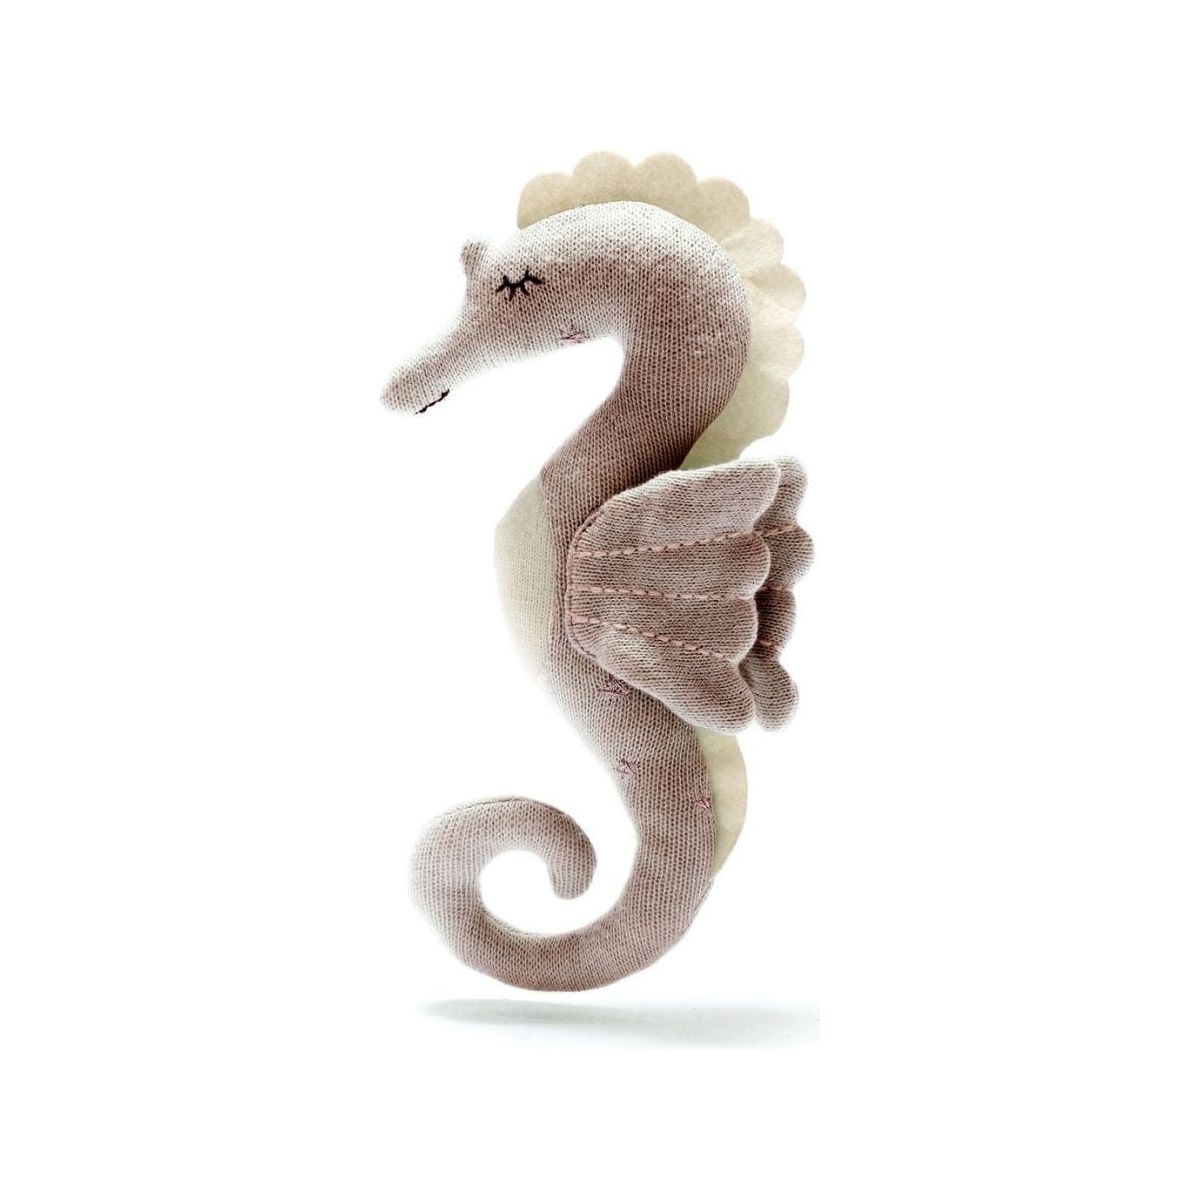 Best Years Ltd Knitted Seahorse Scandi Toy